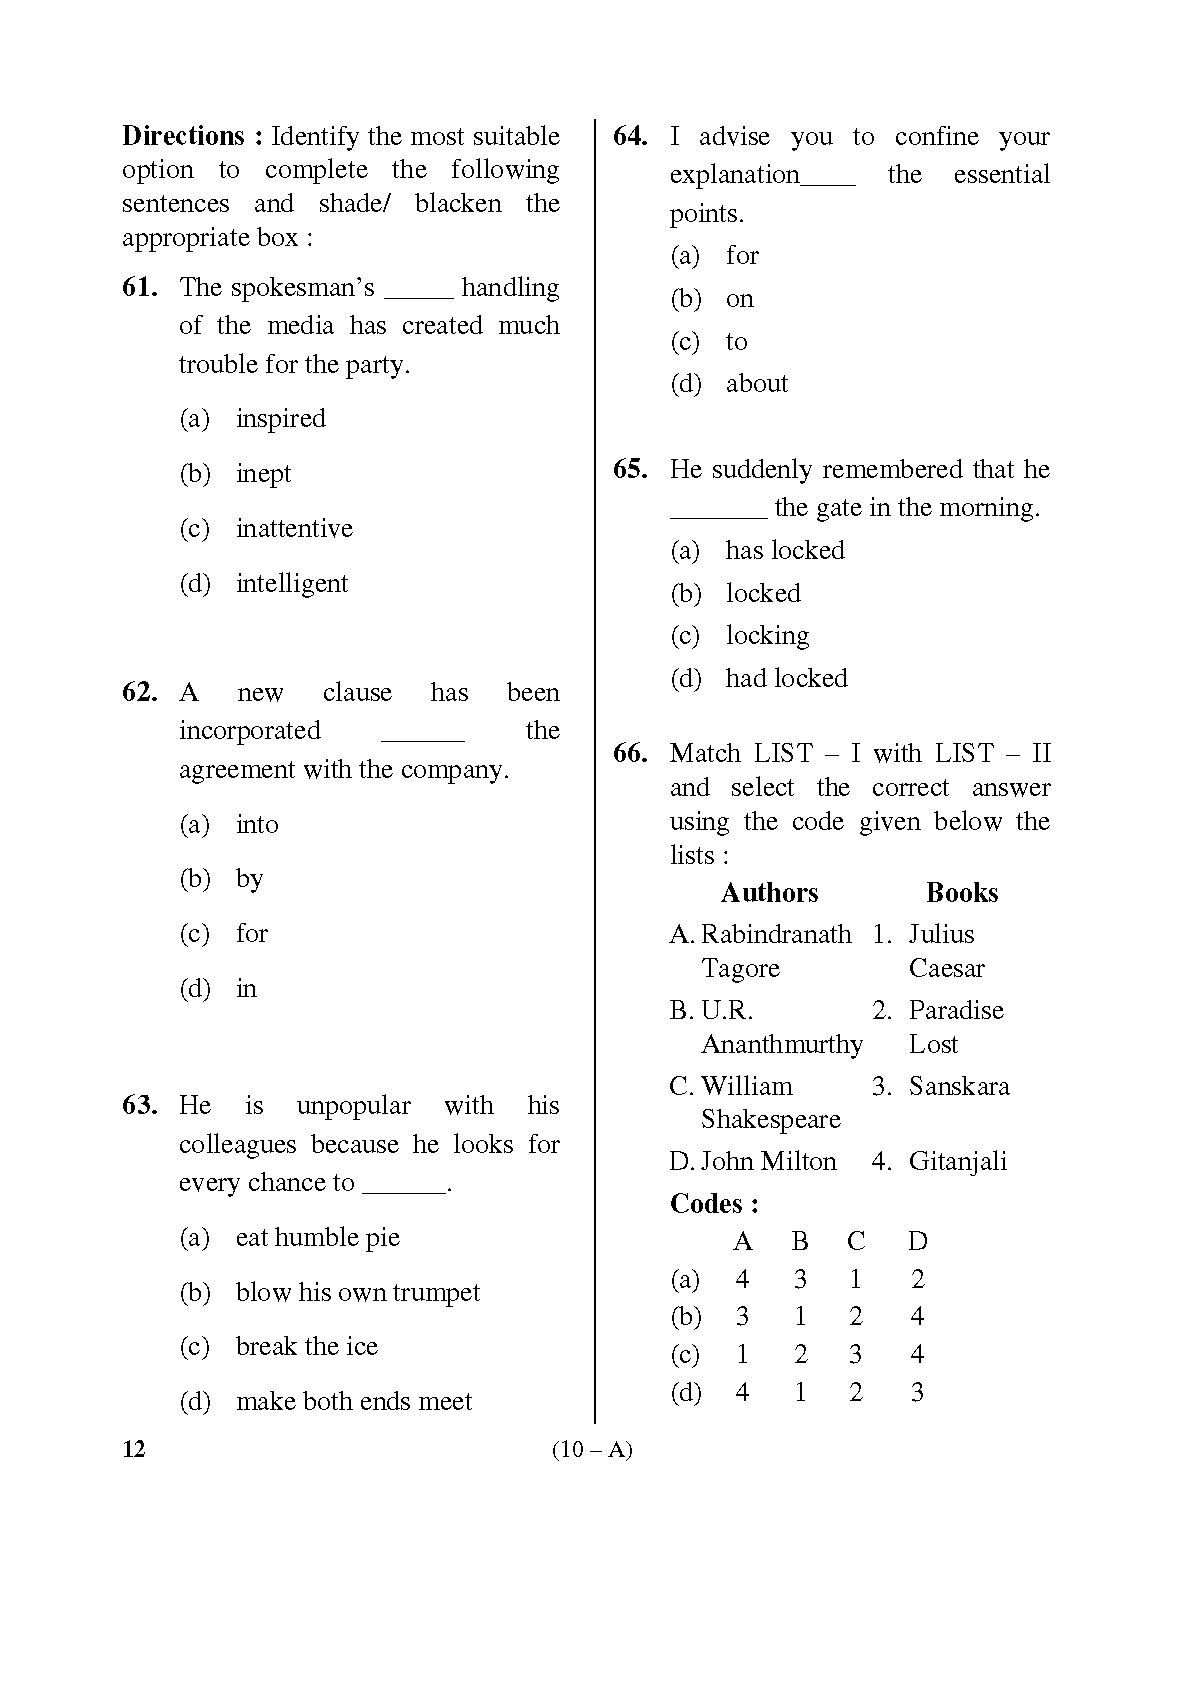 Karnataka PSC English Teachers Exam Sample Question Paper Subject code 12 10